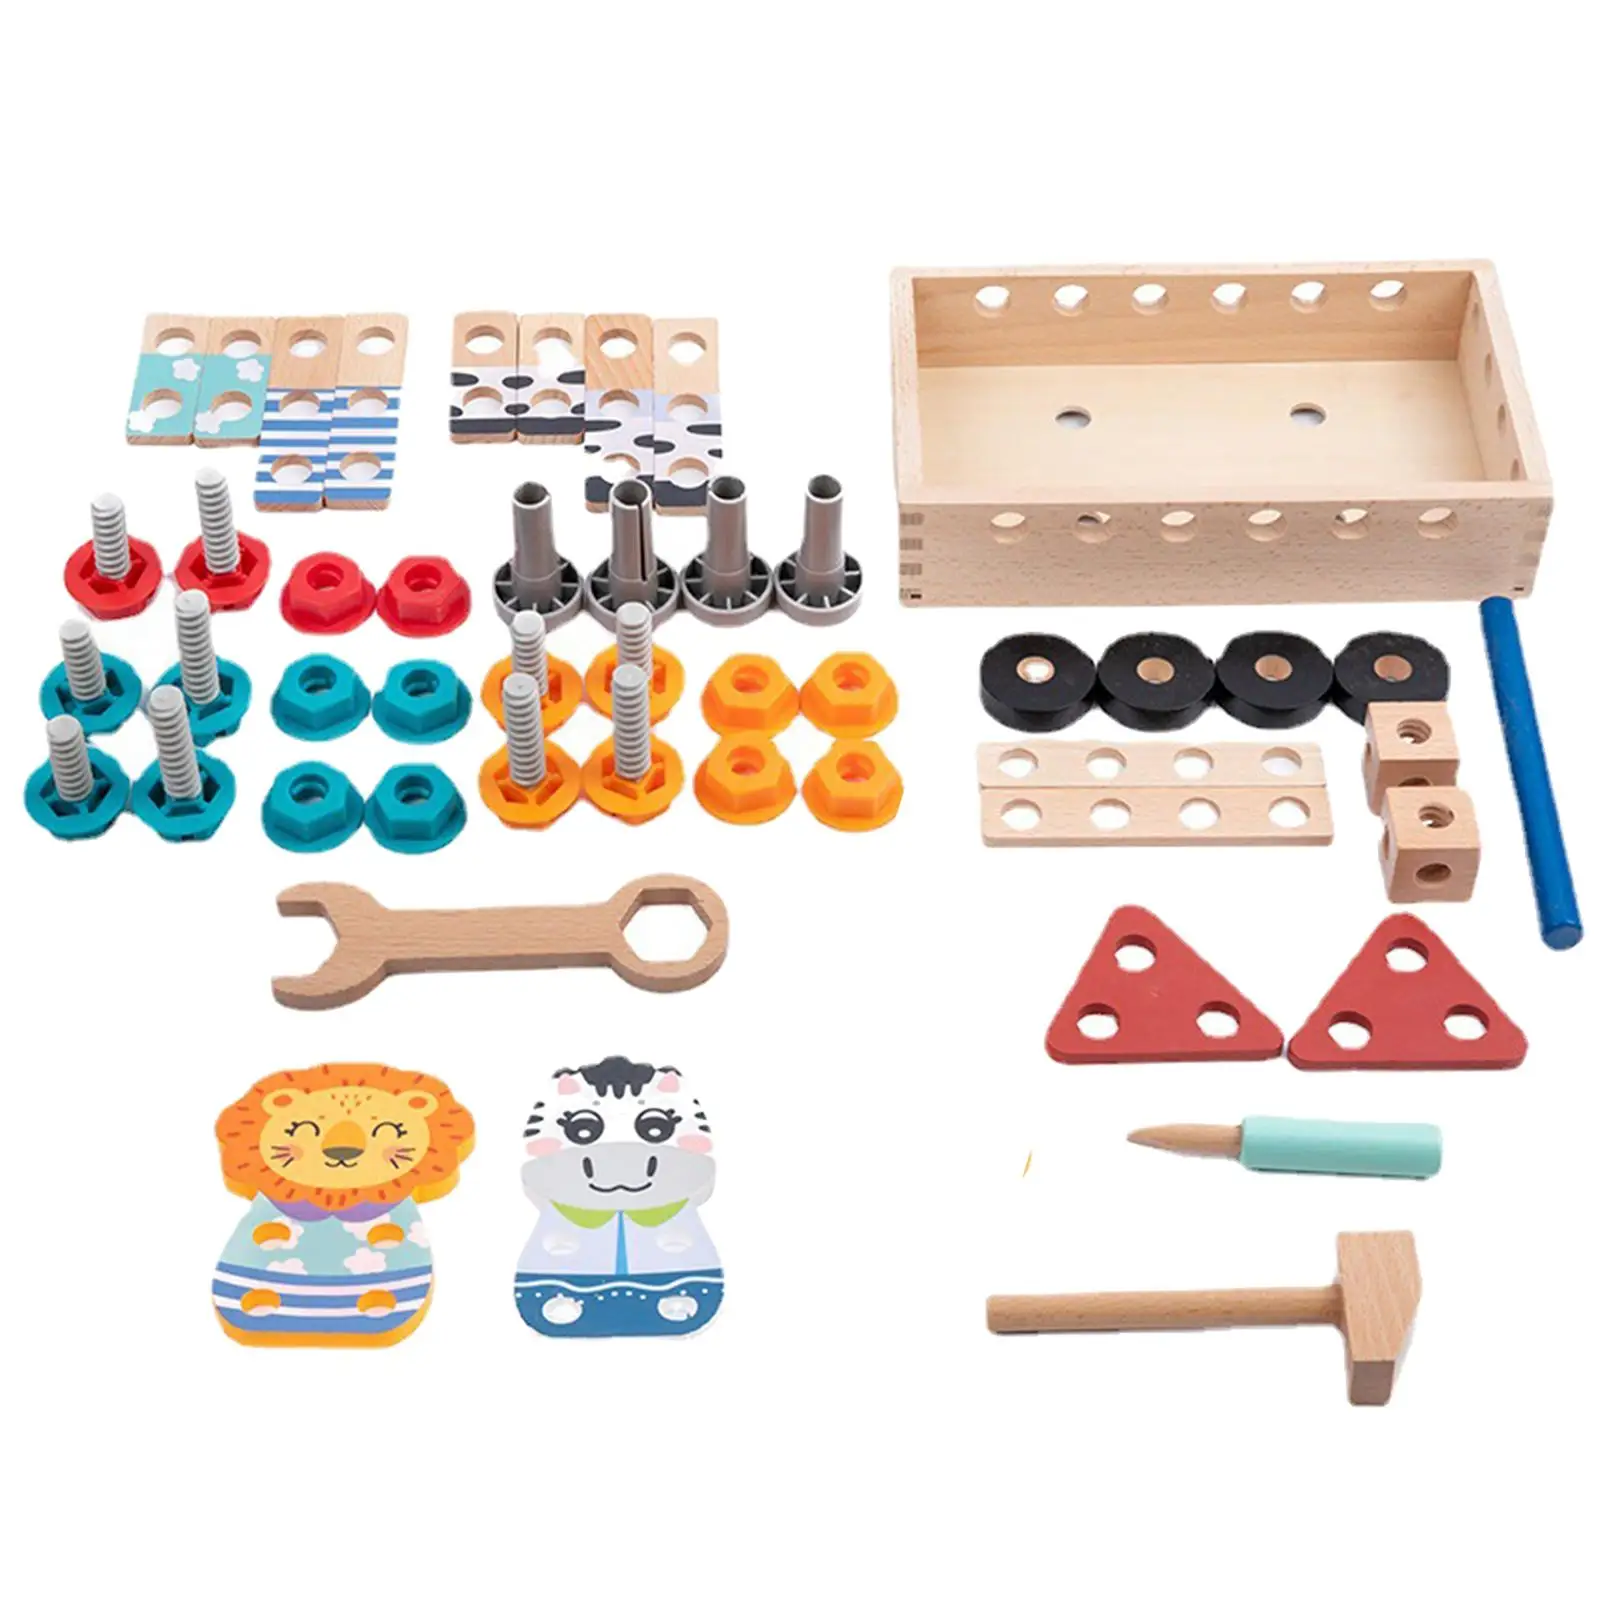 DIY Construction Toy Cognitive Educational Basic Skills Wooden Tool Set for Indoor Preschool Role Play Outdoor Activities